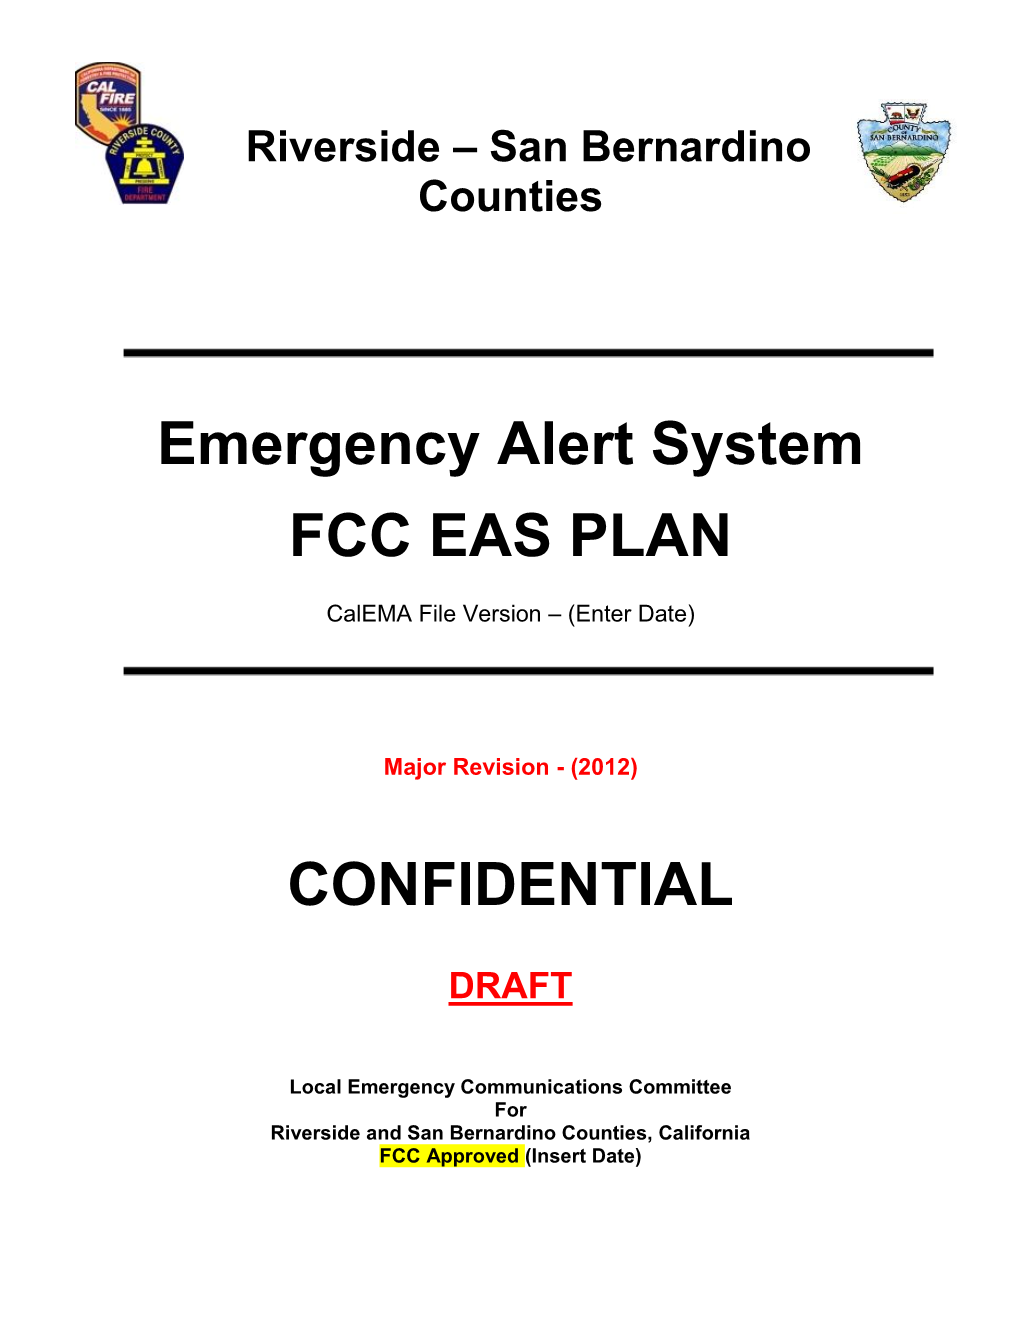 Emergency Alert System FCC EAS PLAN CONFIDENTIAL